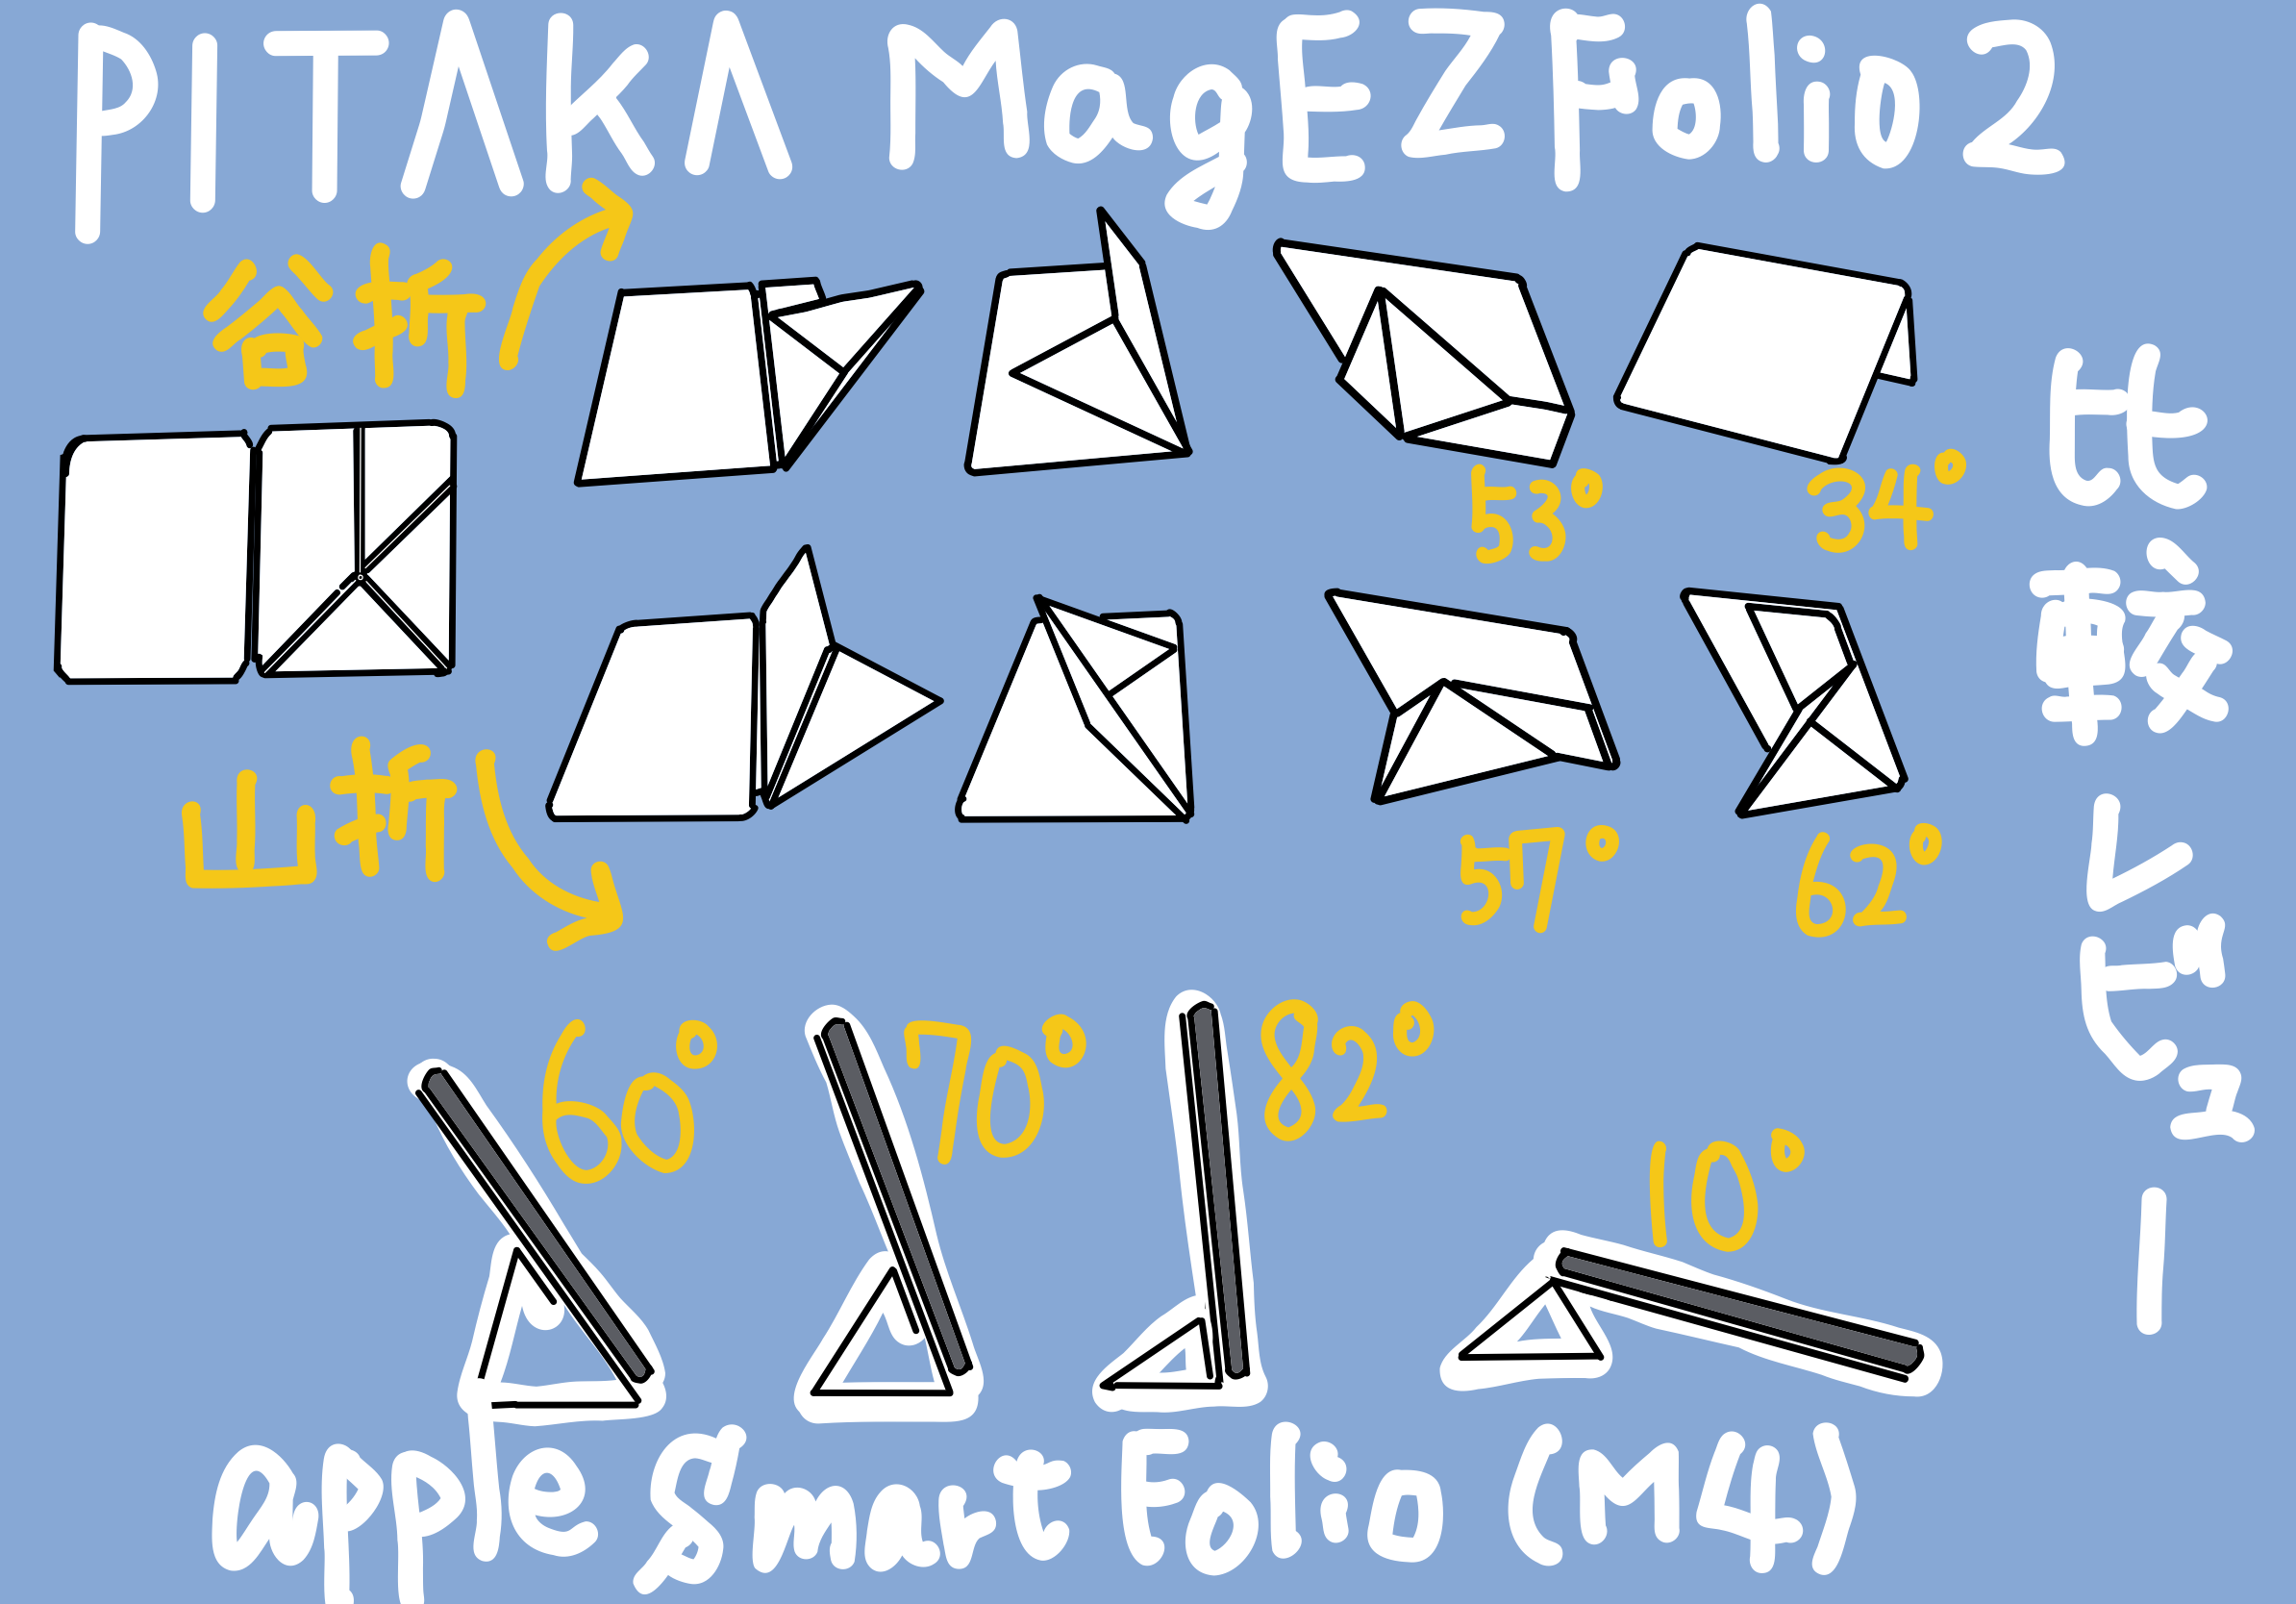 iPad Pro 13インチ (M4) 用の Folio 対決 apple Smart Folio vs PITAKA MagEZ Folio 2